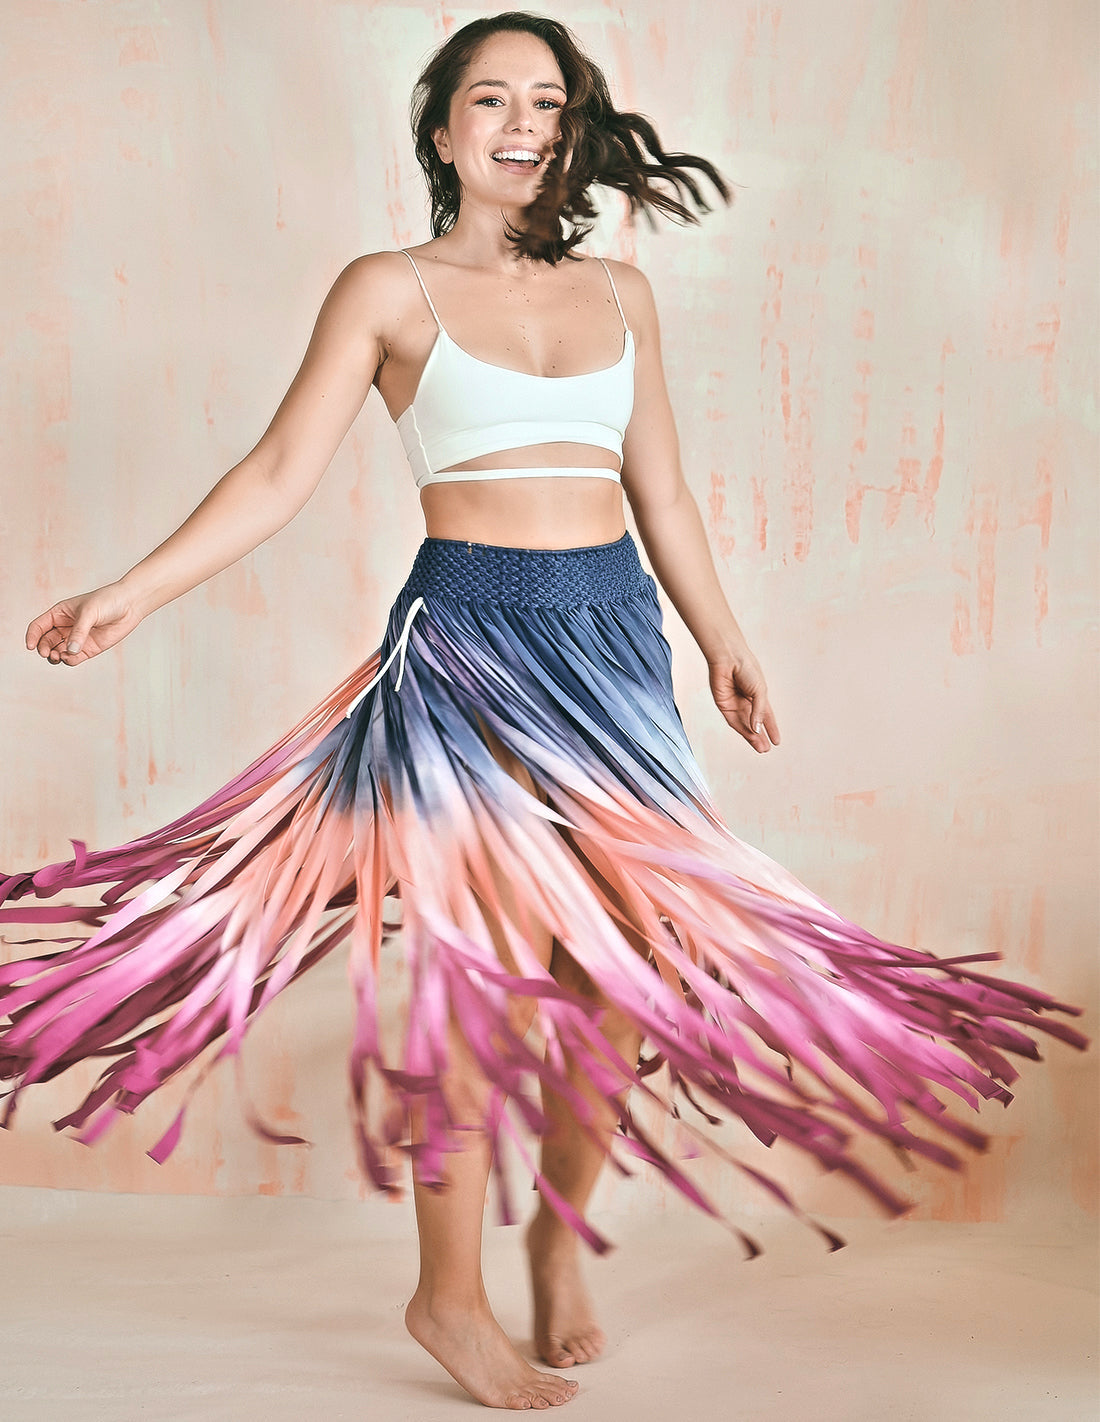 Flow Skirt Uyuni Storm. Hand-Dyed Beach Skirt With Hand Woven Macramé In Uyuni Storm. Entreaguas